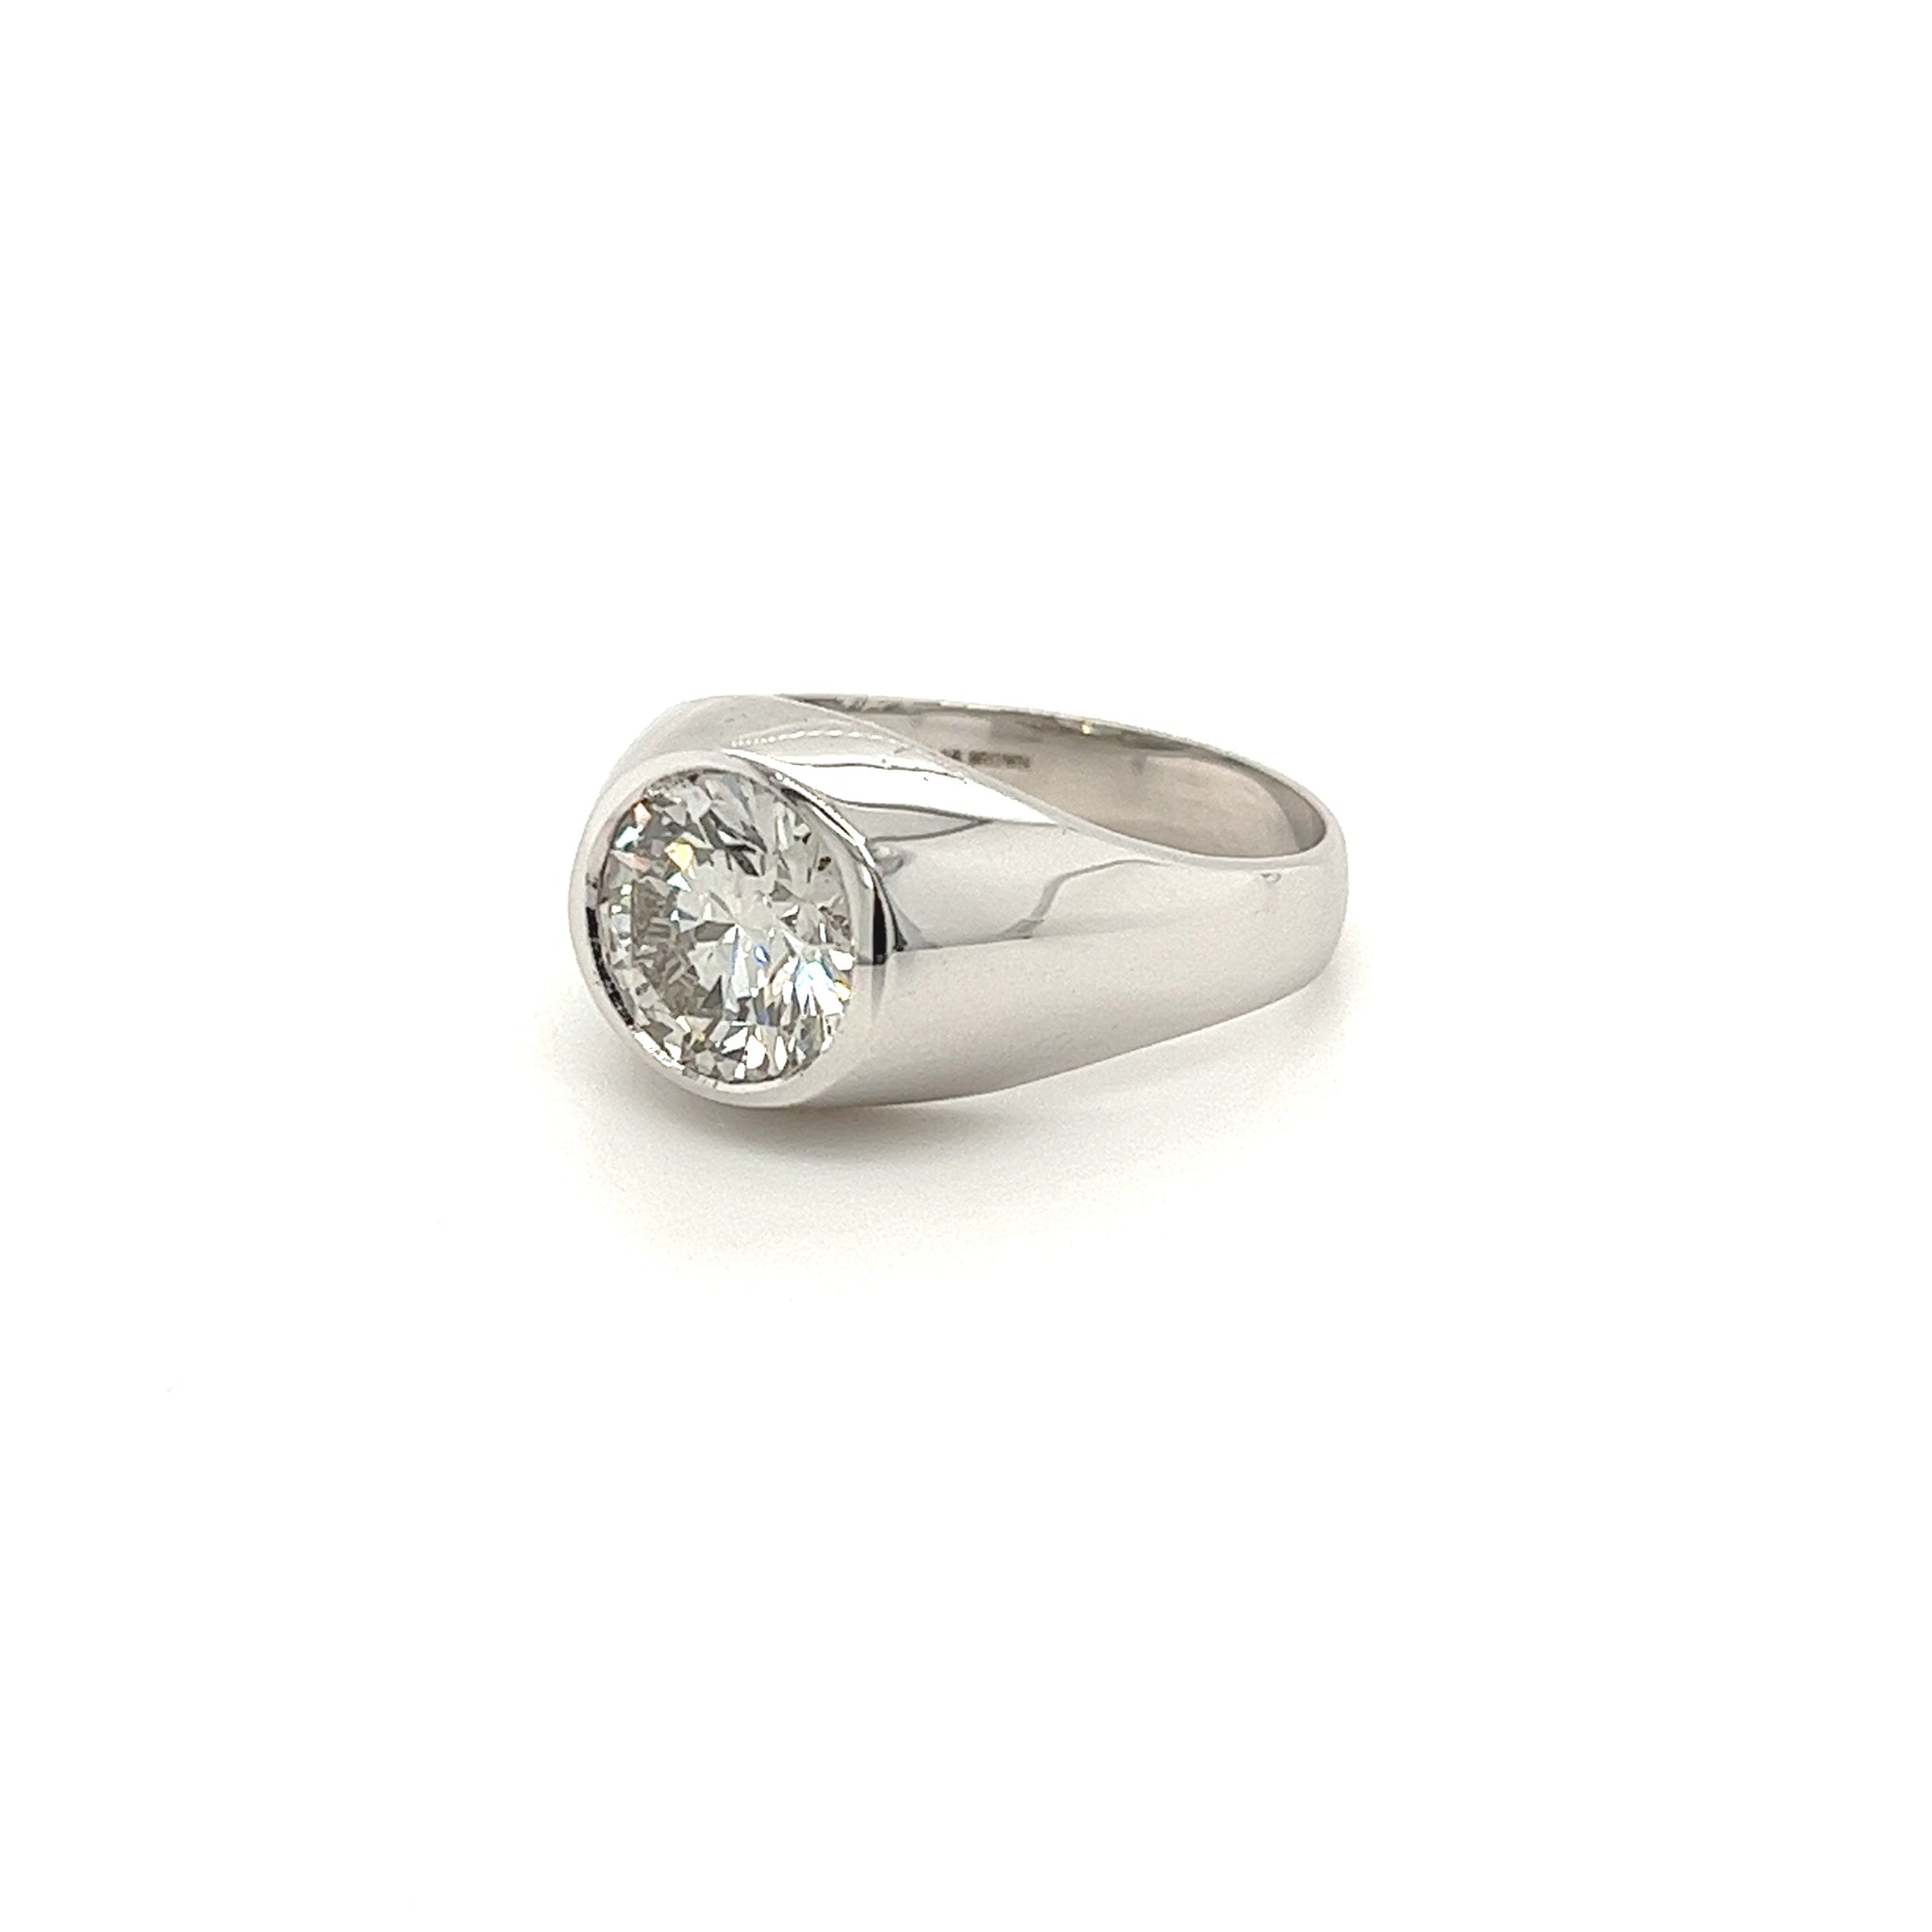 2.6 Carat Round Cut Diamond in 14K White Gold Bezel Set Mens Solitaire Ring-Rings-ASSAY